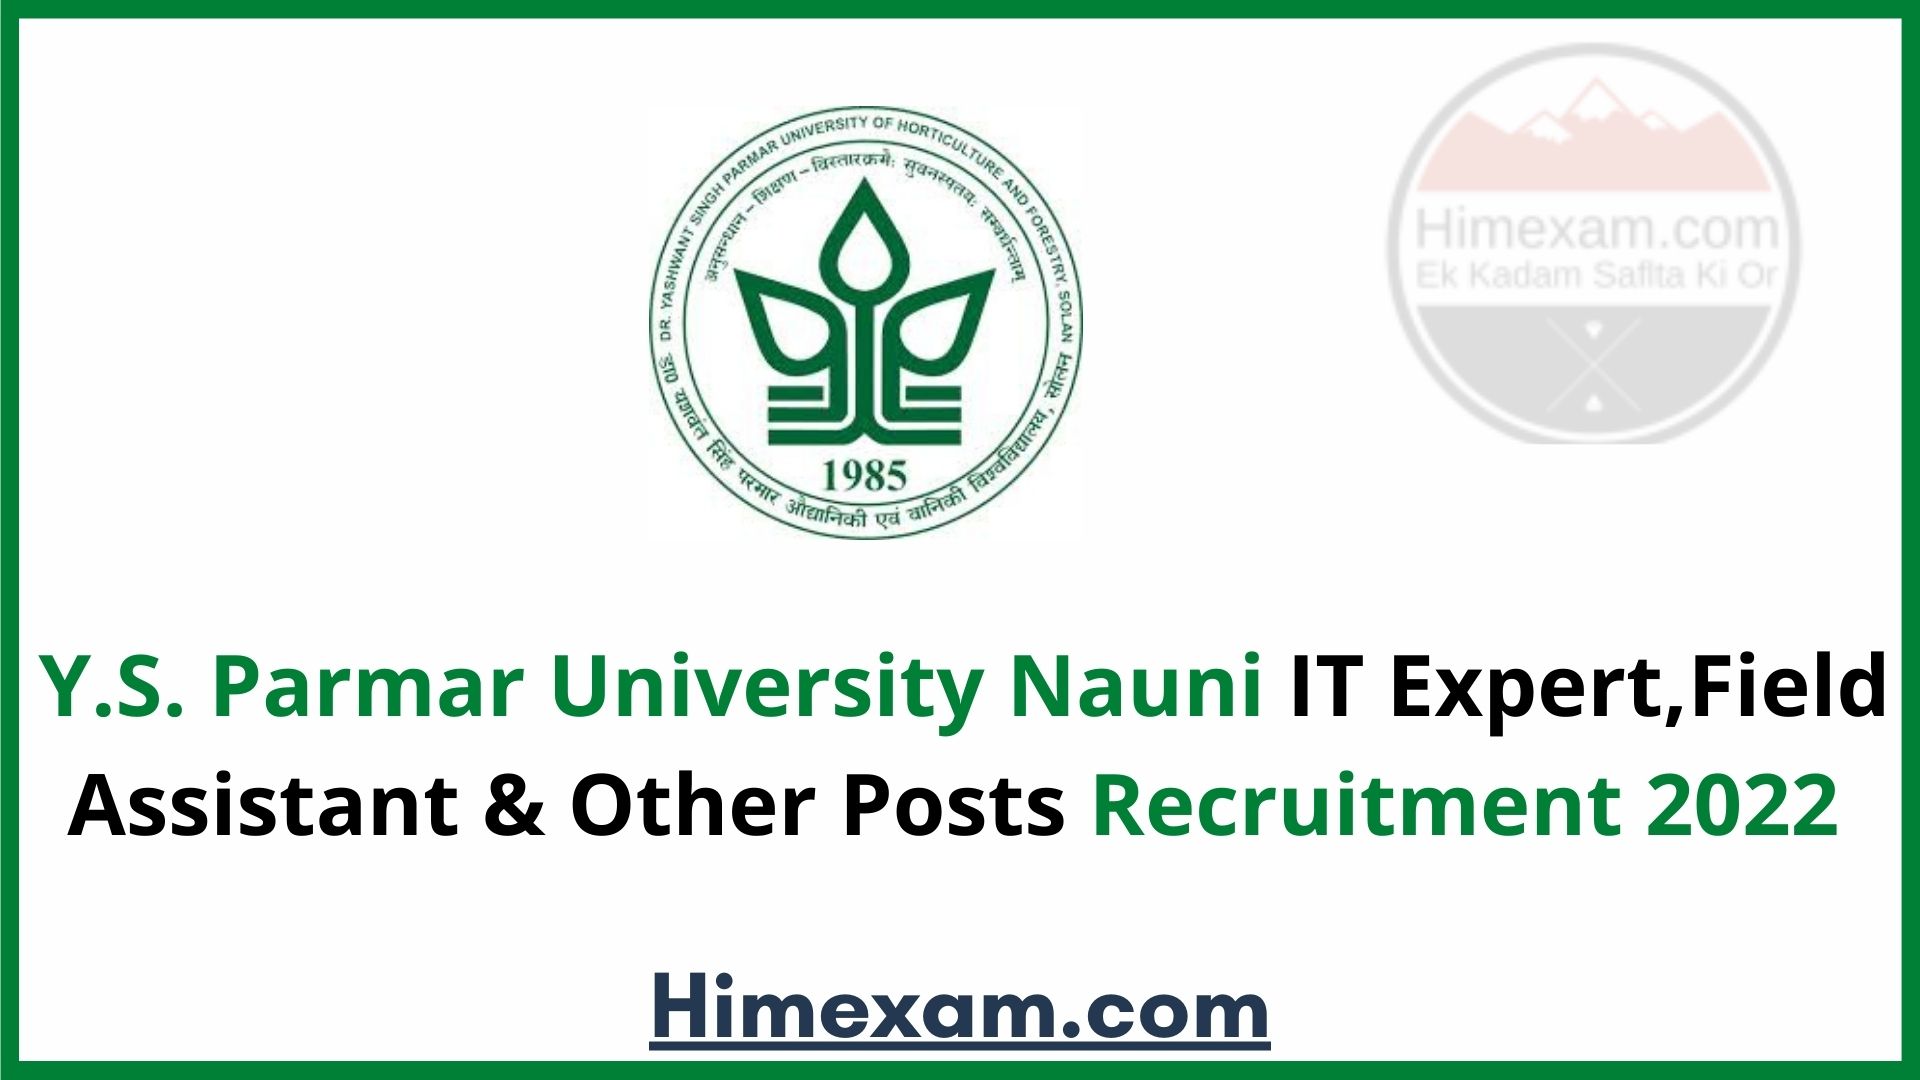 Y.S. Parmar University Nauni IT Expert,Field Assistant & Other Posts Recruitment 2022